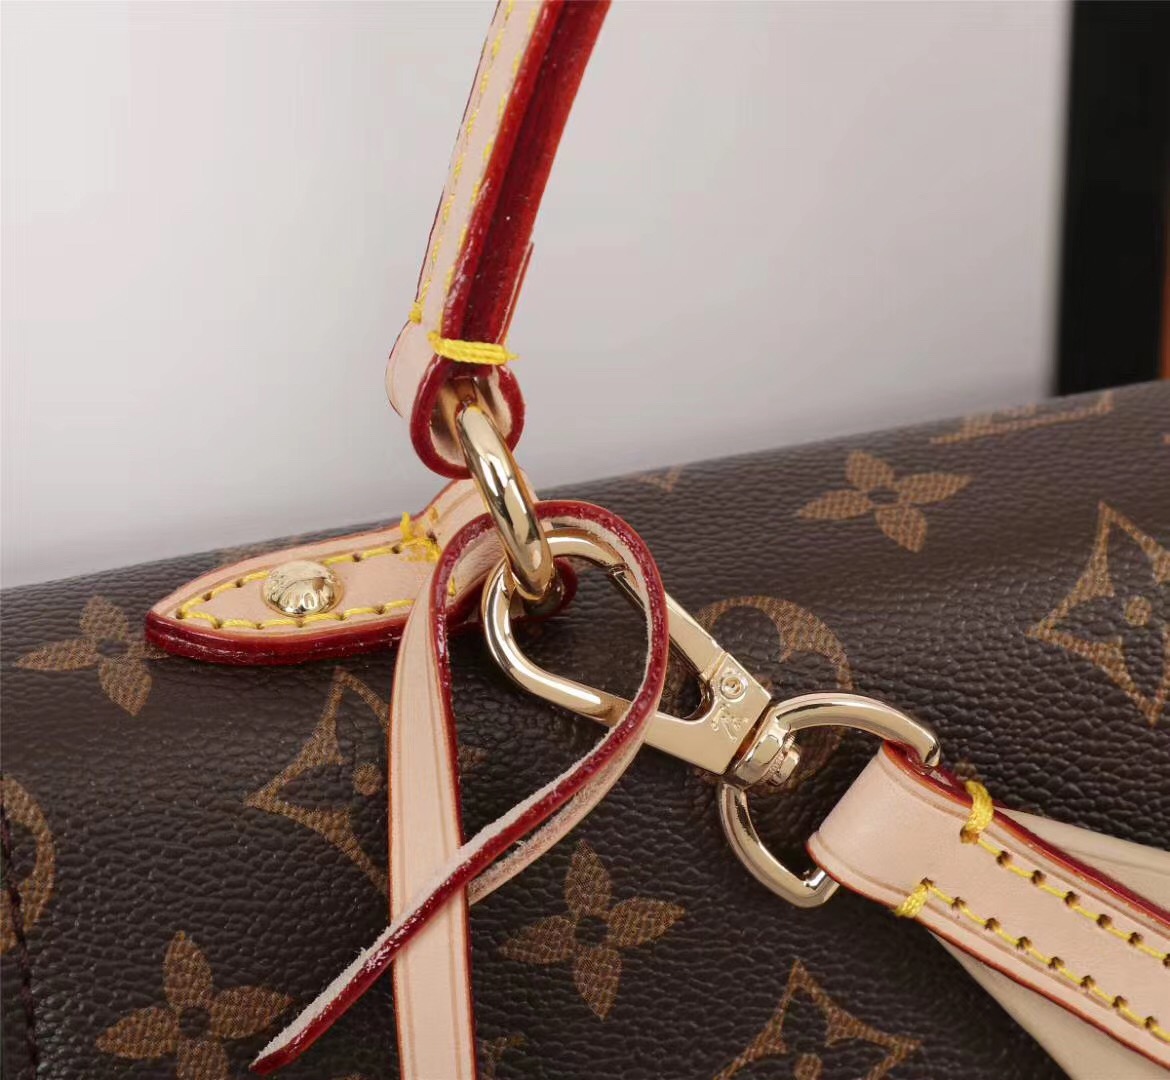 Louis Vuitton Monogram Canvas Saintonge Handbag - My Luxury Bargain